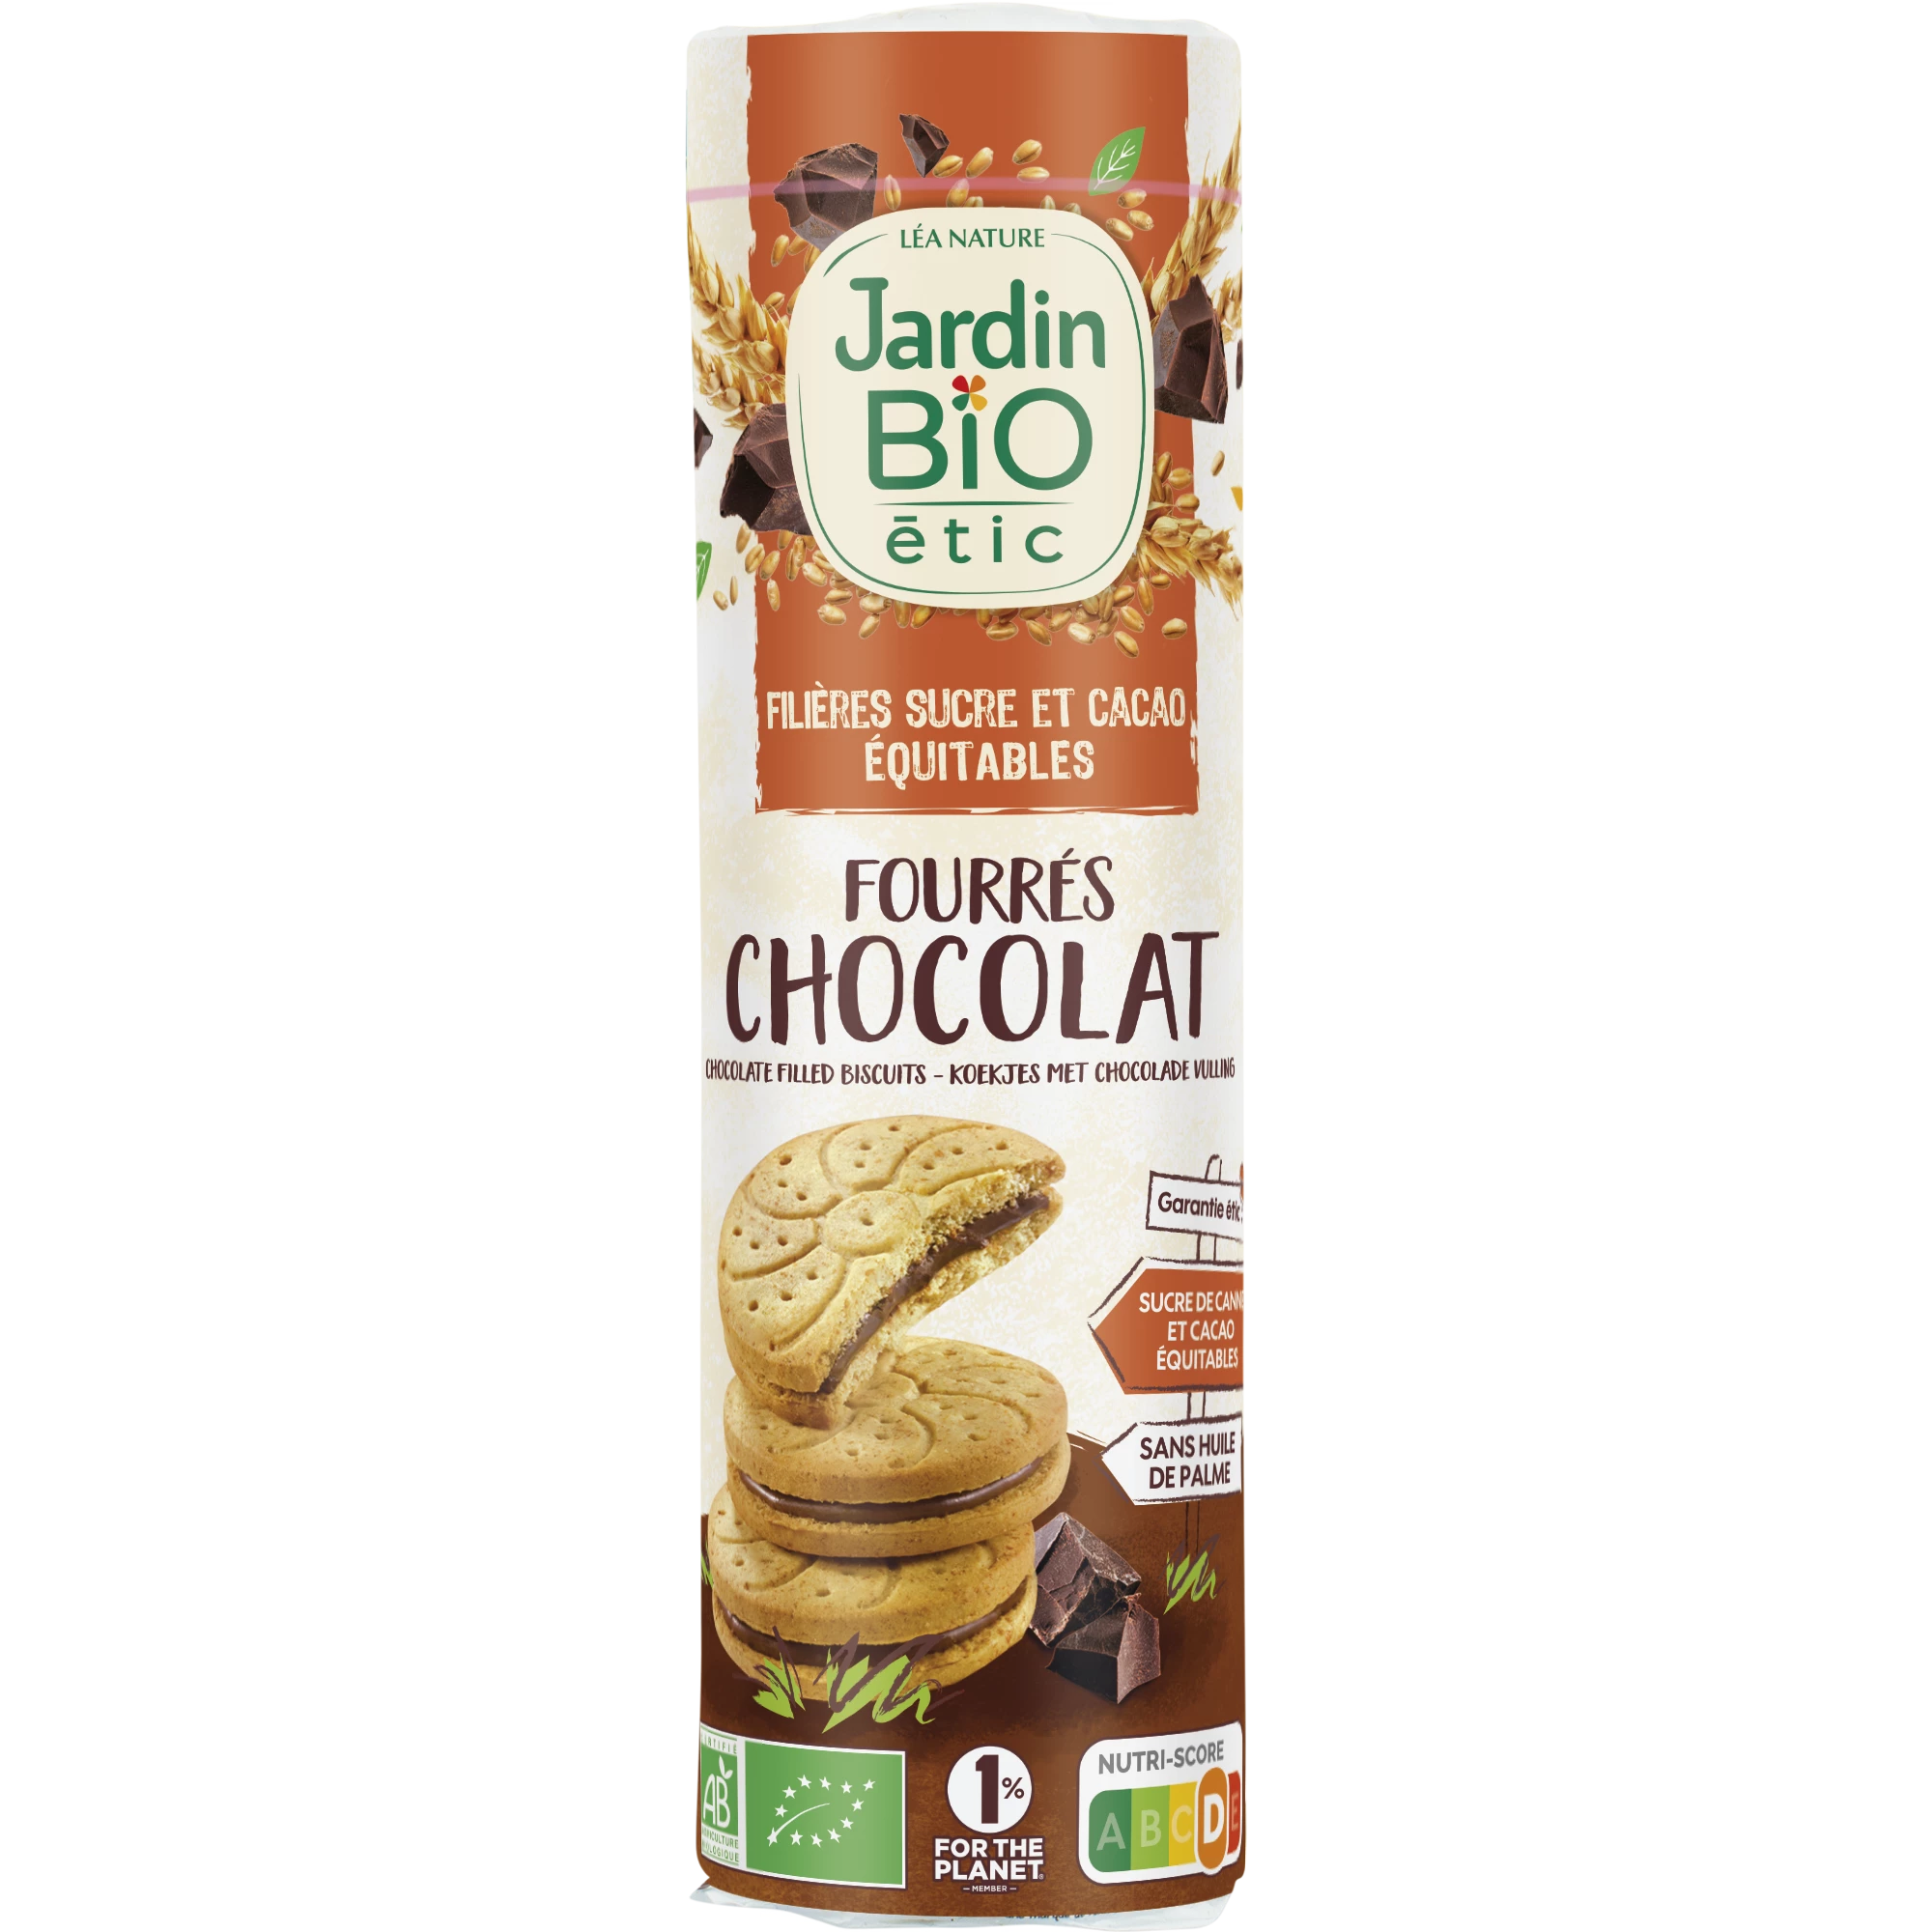 Chocolate filled biscuits, 300g, JARDIN Bio ETIC